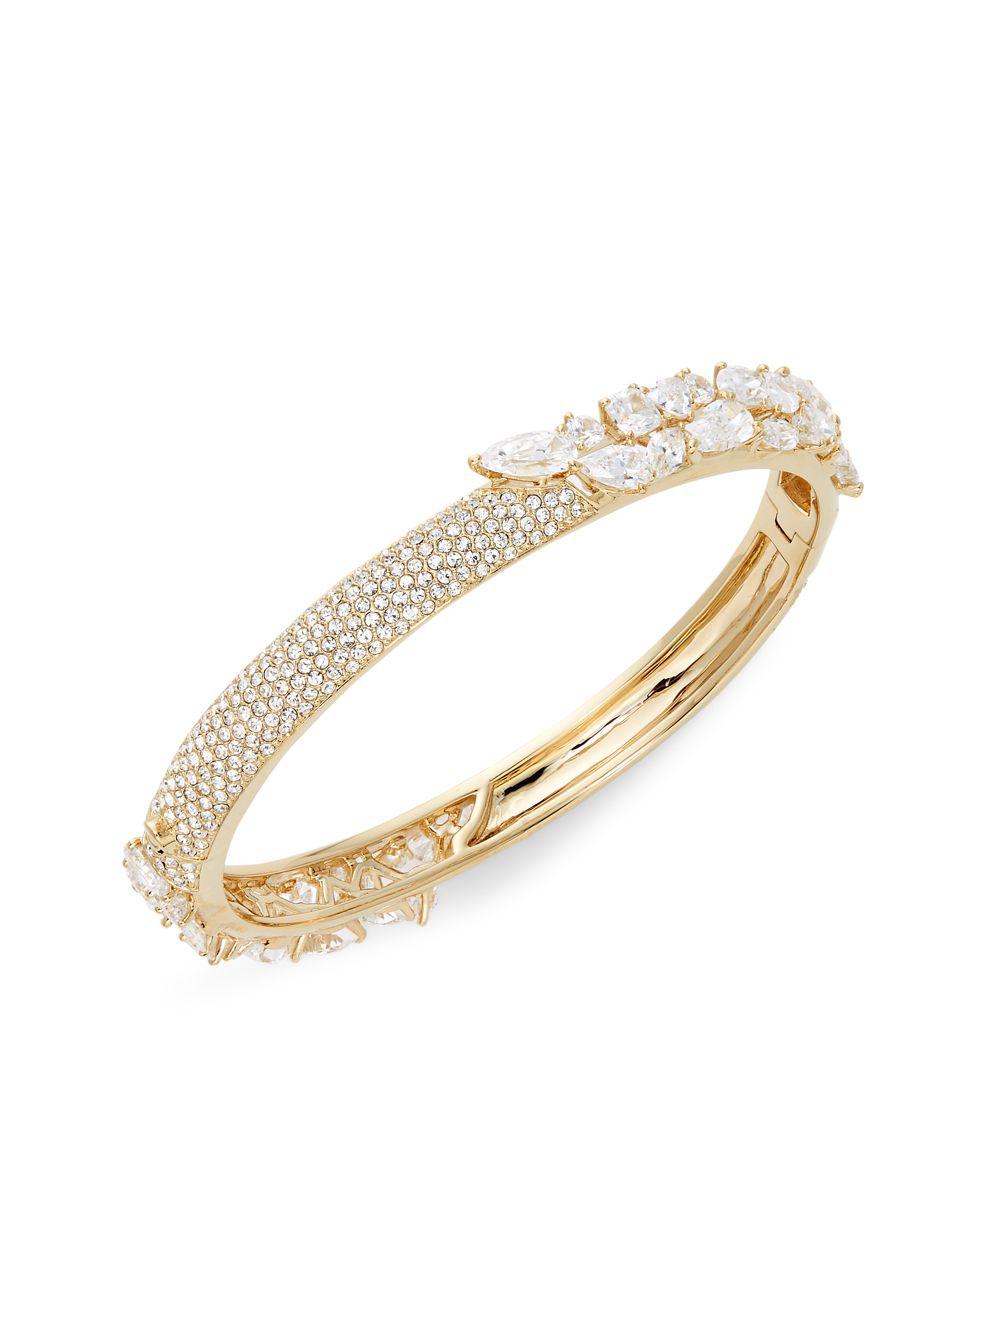 Adriana Orsini Roma 18k Goldplated Crystal Hinge Bangle Bracelet in ...